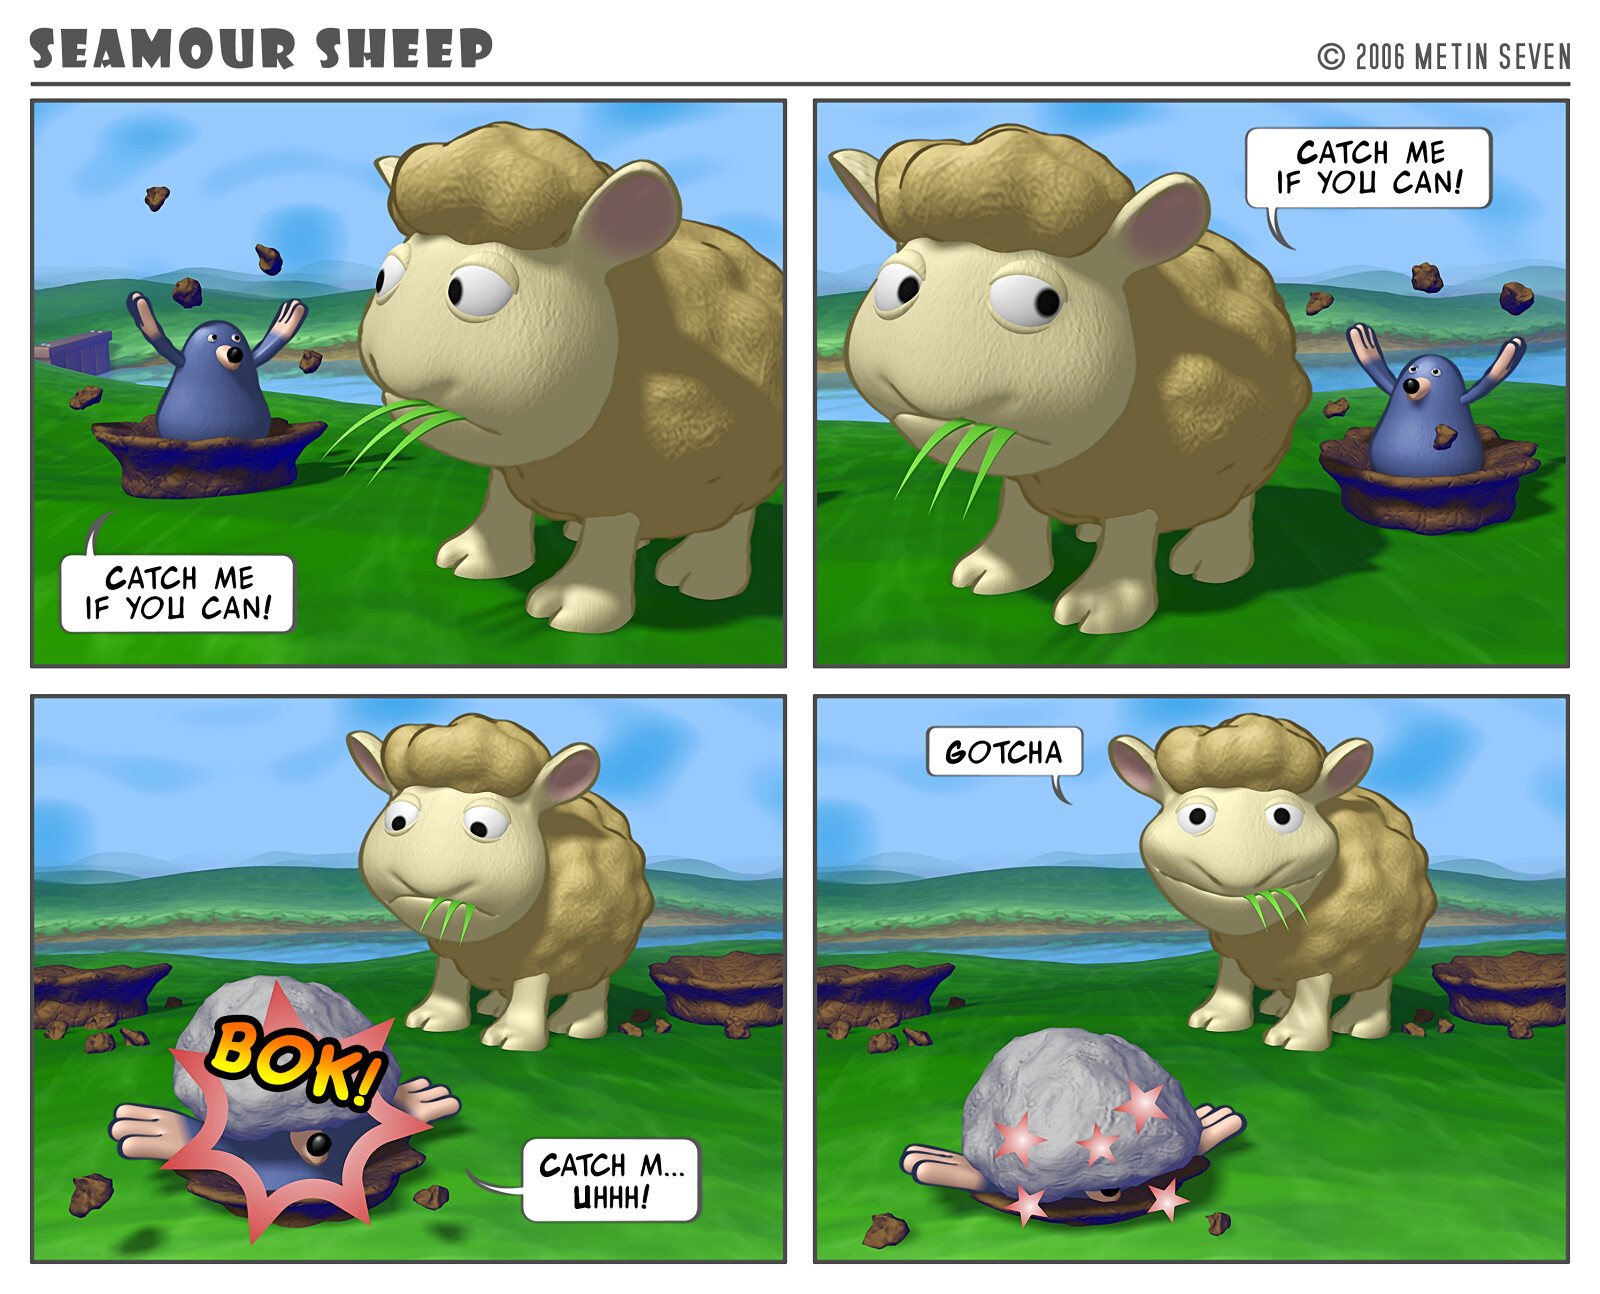 Seamour Sheep and Marty Mole comic strip episode: Gotcha